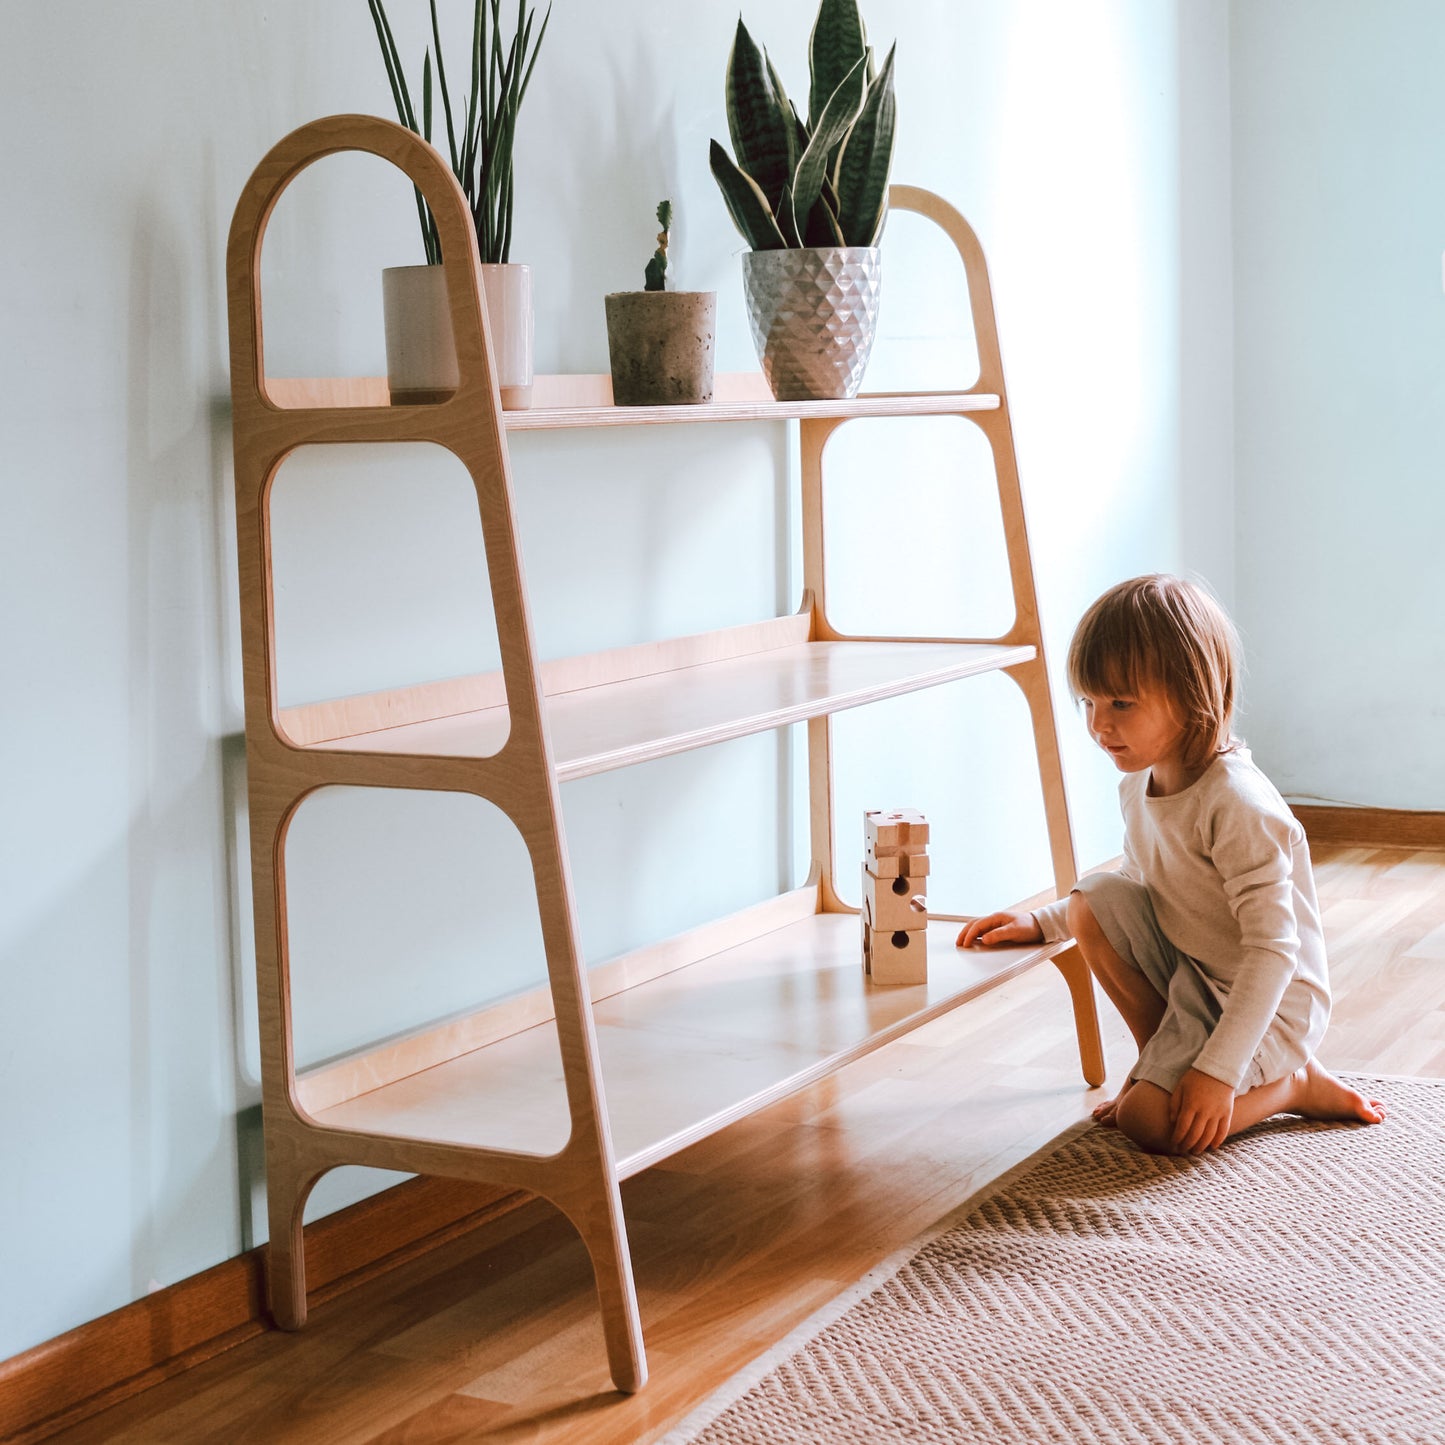 The WoodU Shelf - 3 shelves